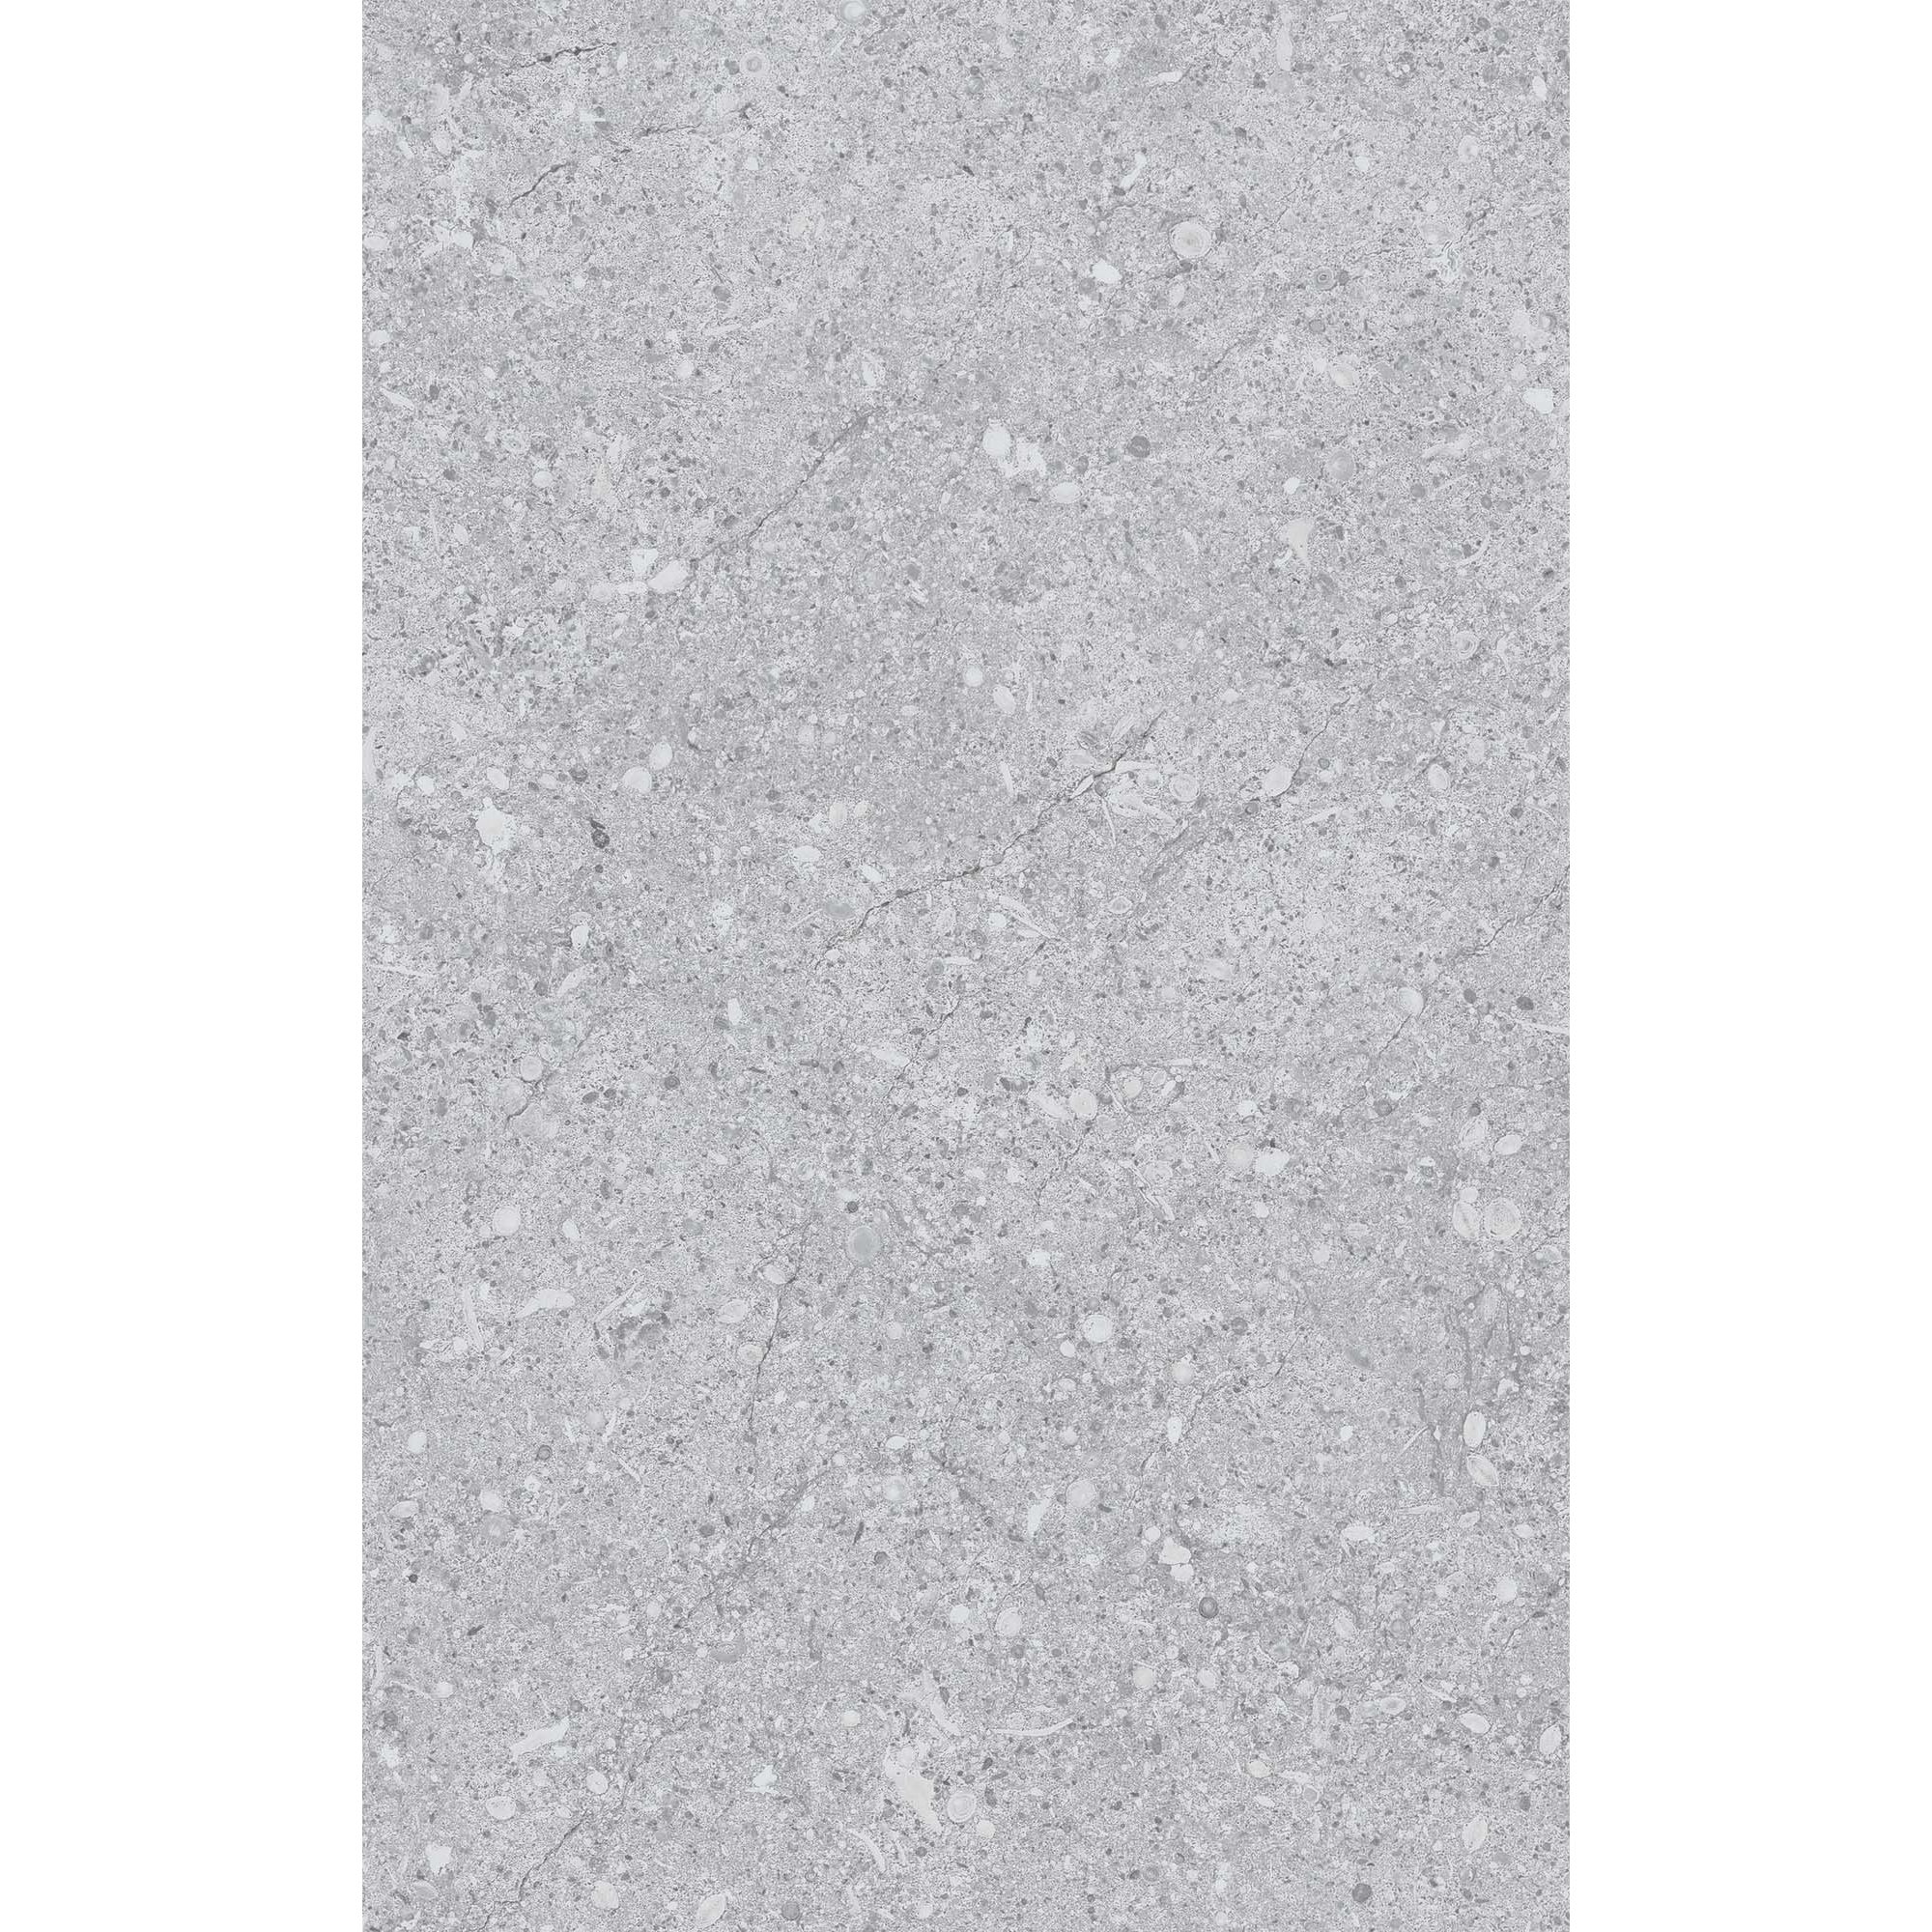 Faianta baie Kai Greco Grey, gri, mat, aspect de piatra, 40 x 25 cm aspect